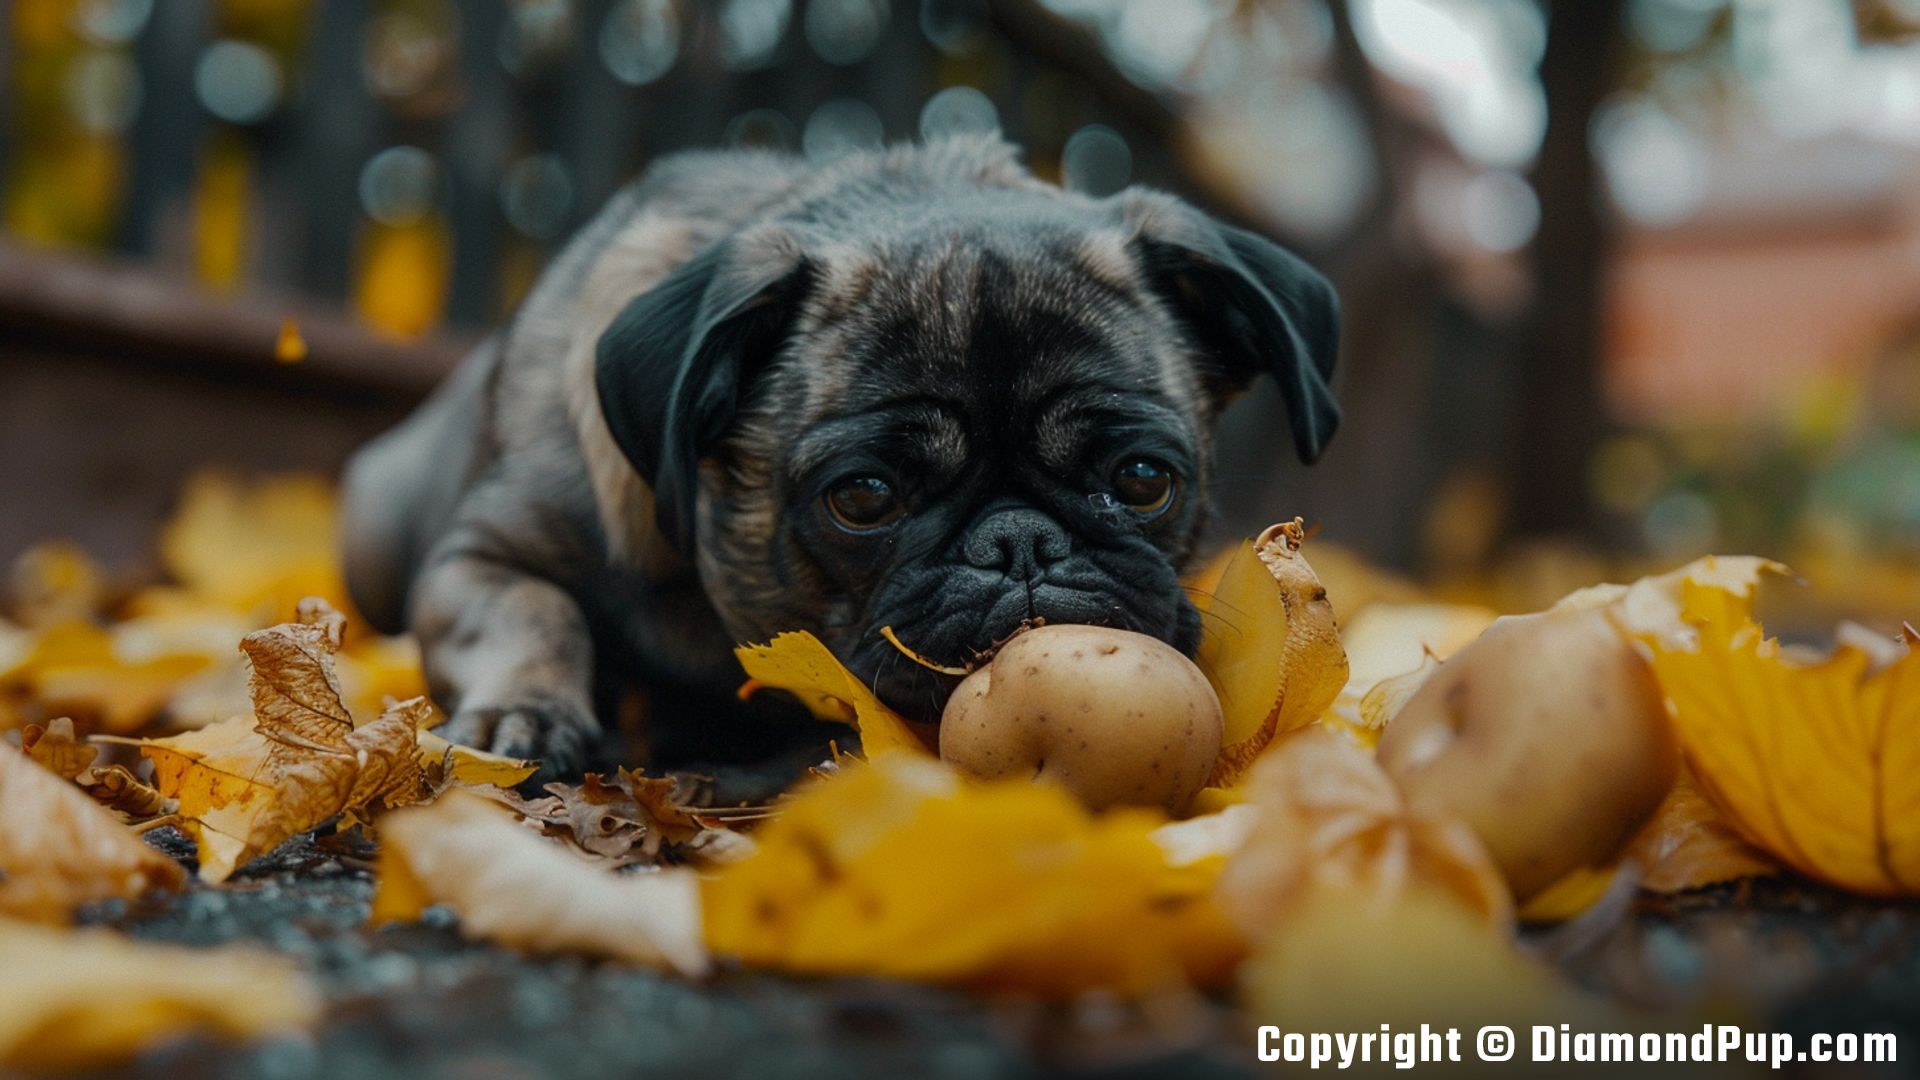 Photo of a Playful Pug Snacking on Potato